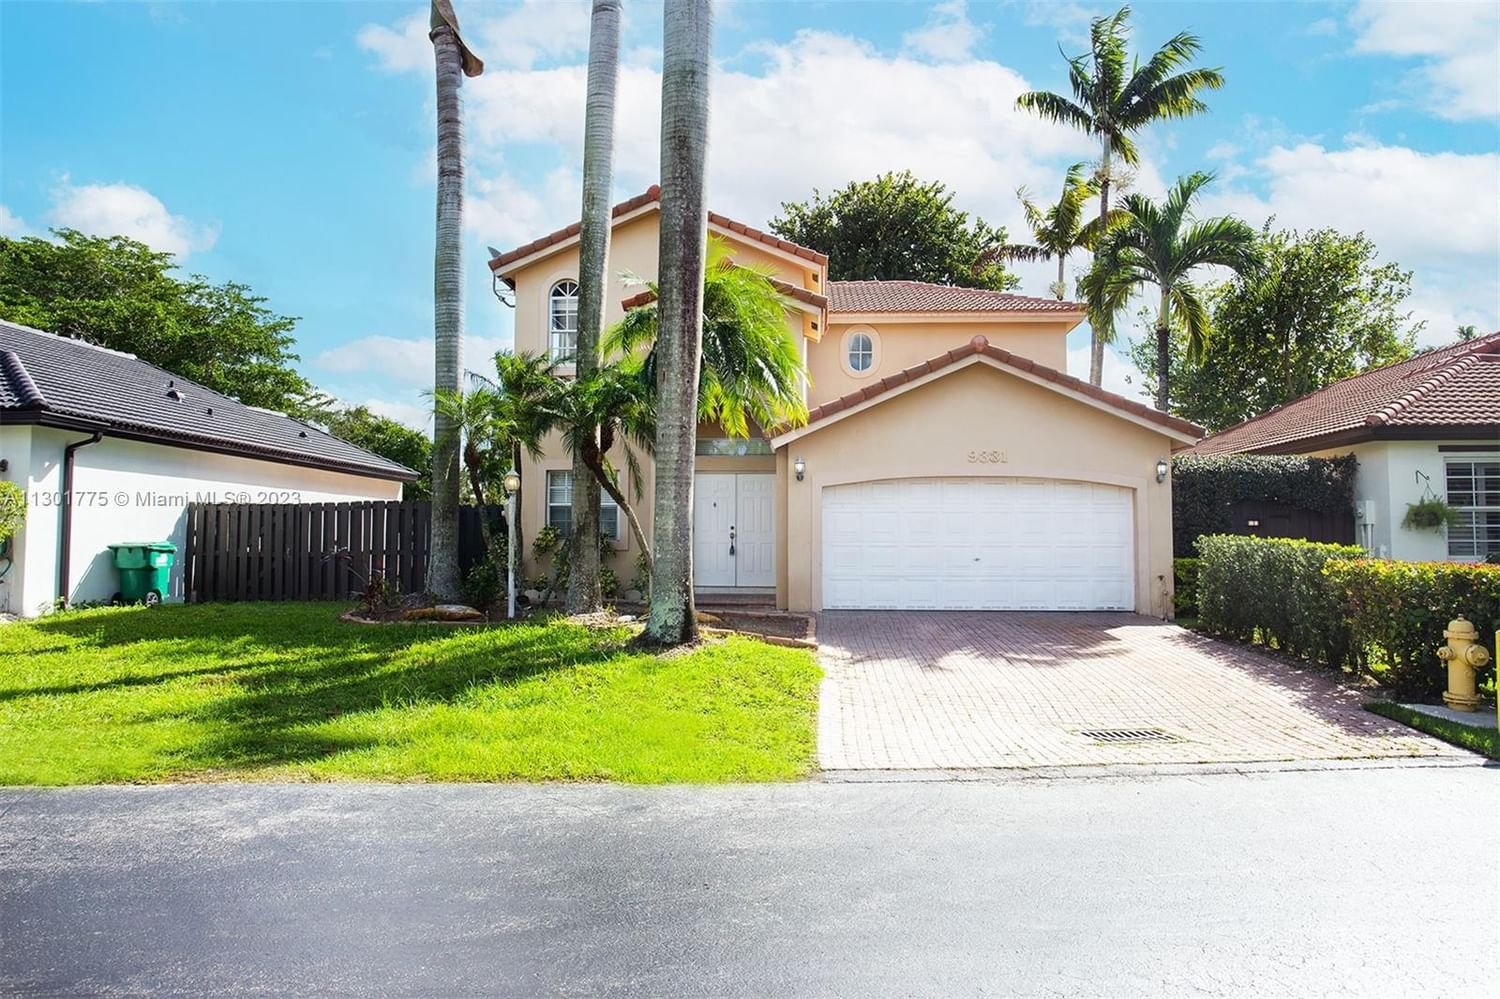 Real estate property located at 9331 167 Court, Miami-Dade County, Miami, FL